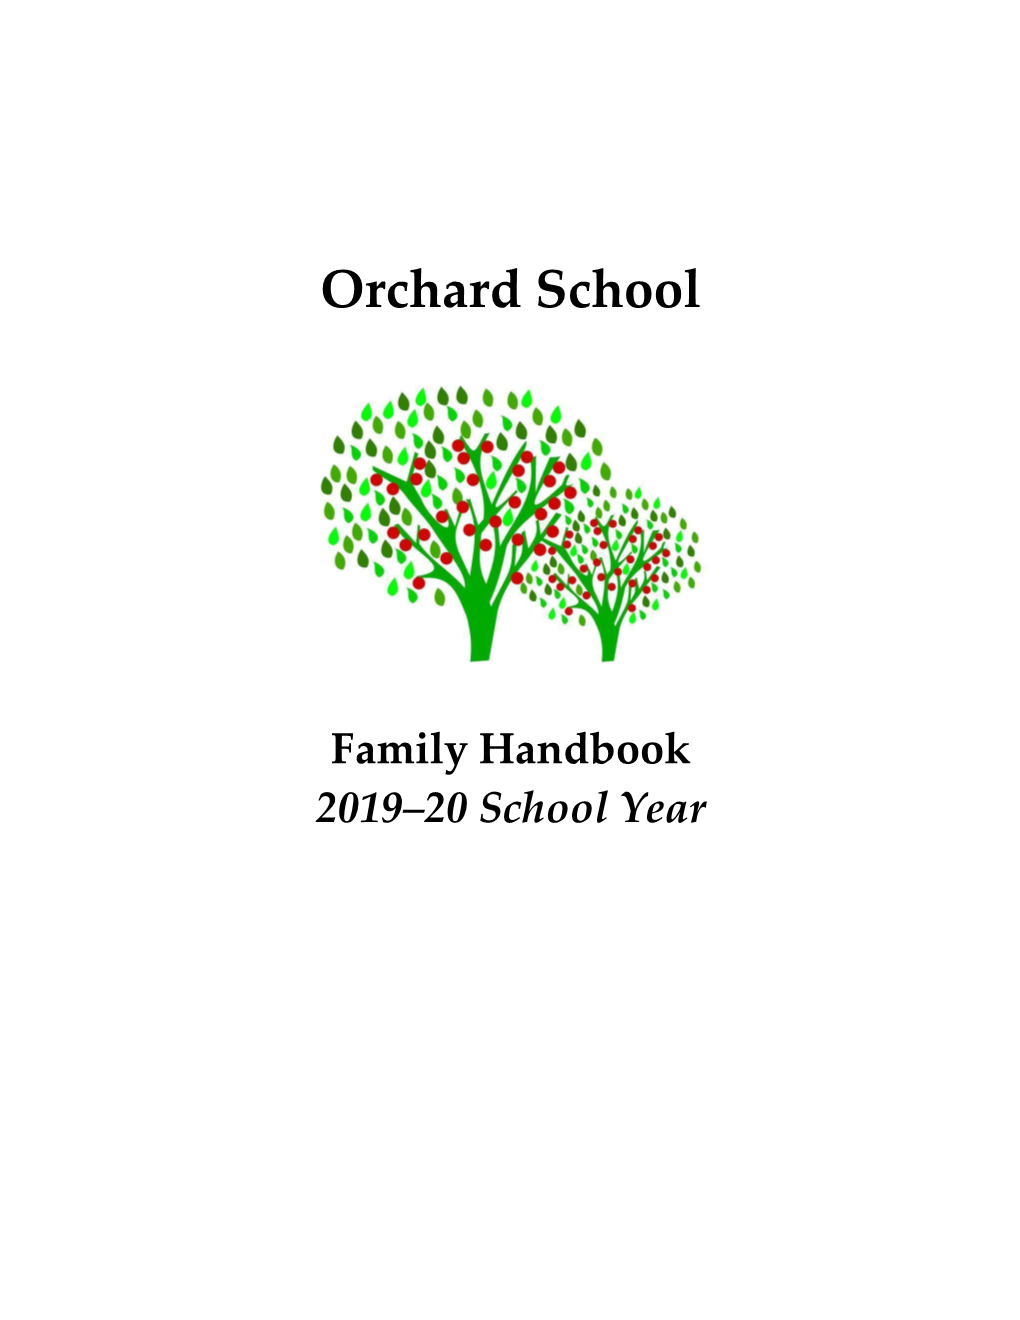 Orchard School Family Handbook, 2019-20